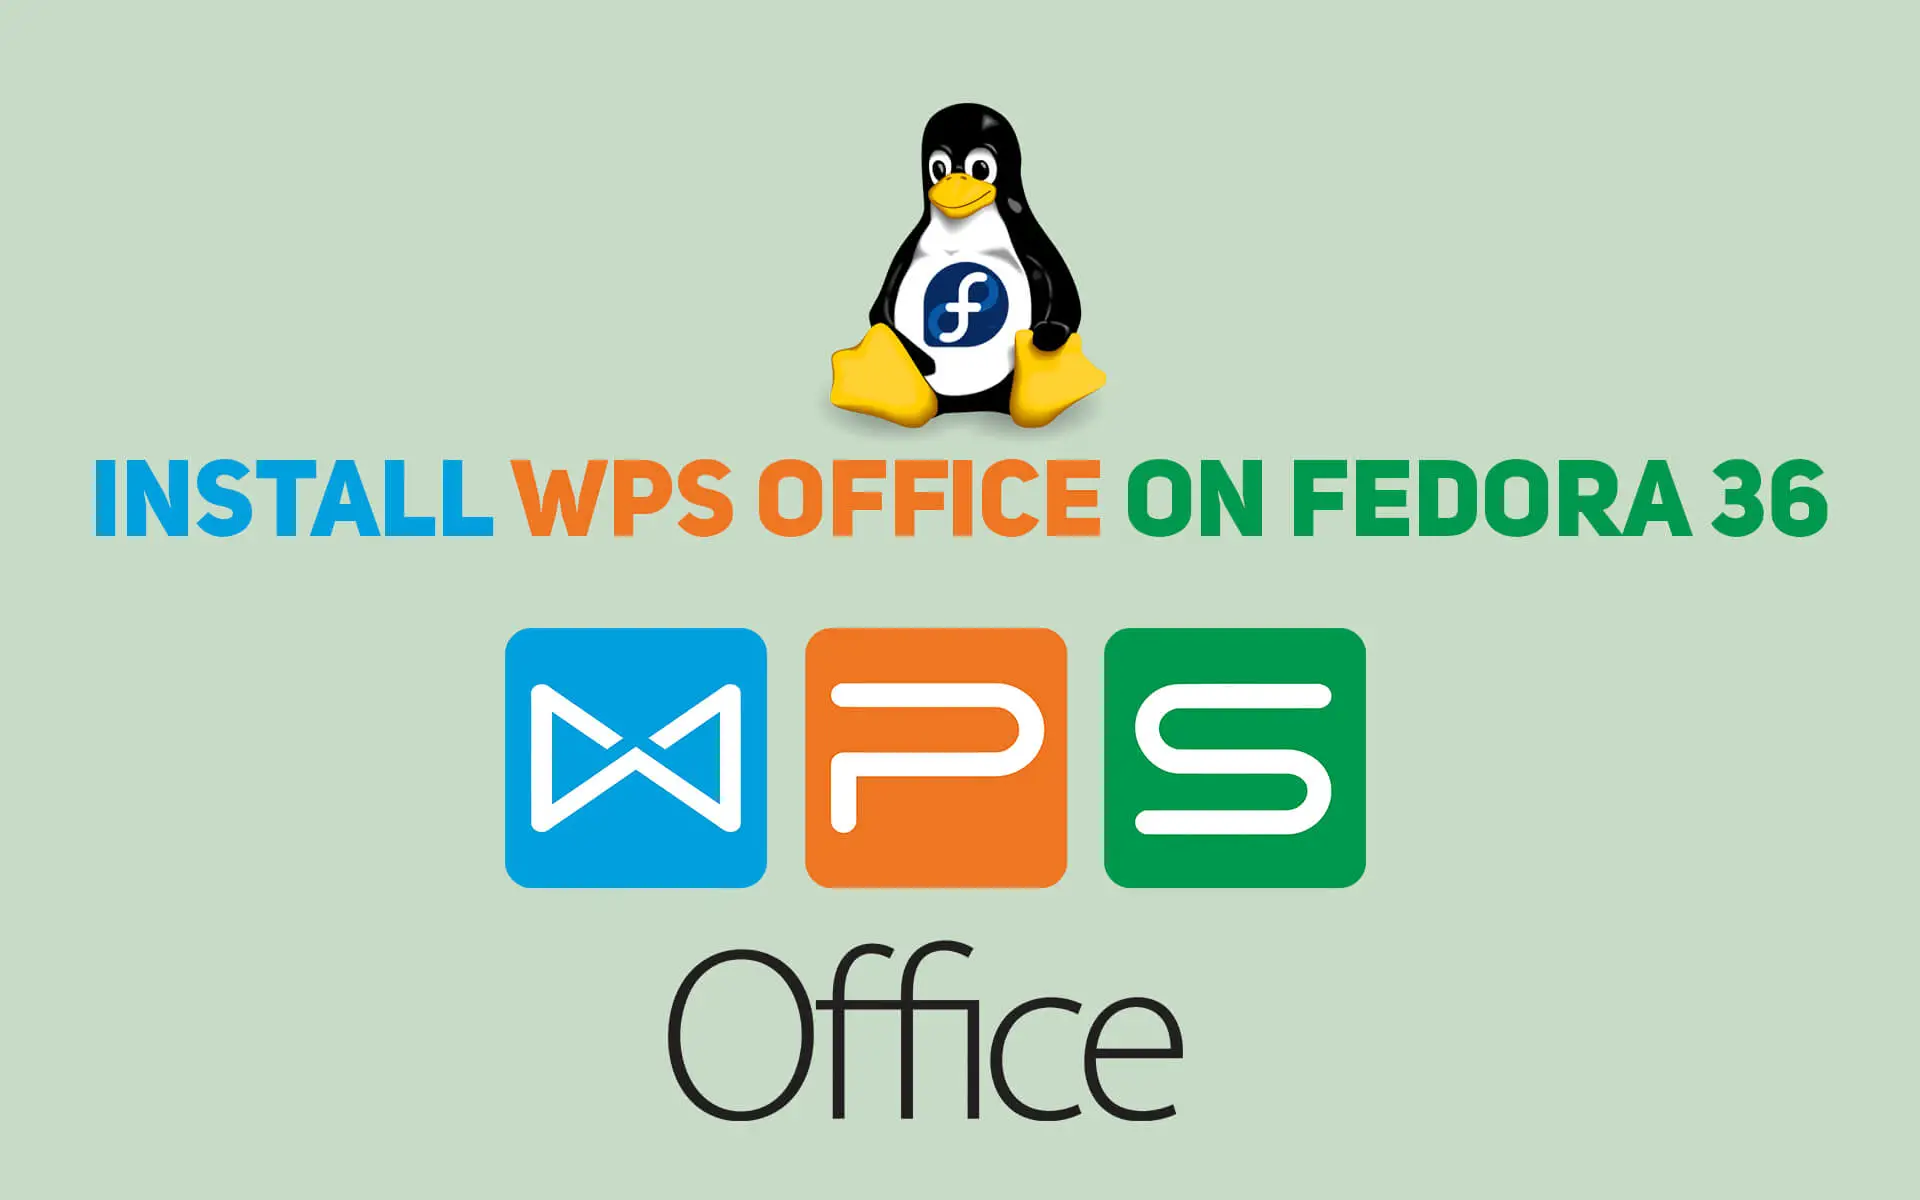 Install WPS Office on Fedora 36